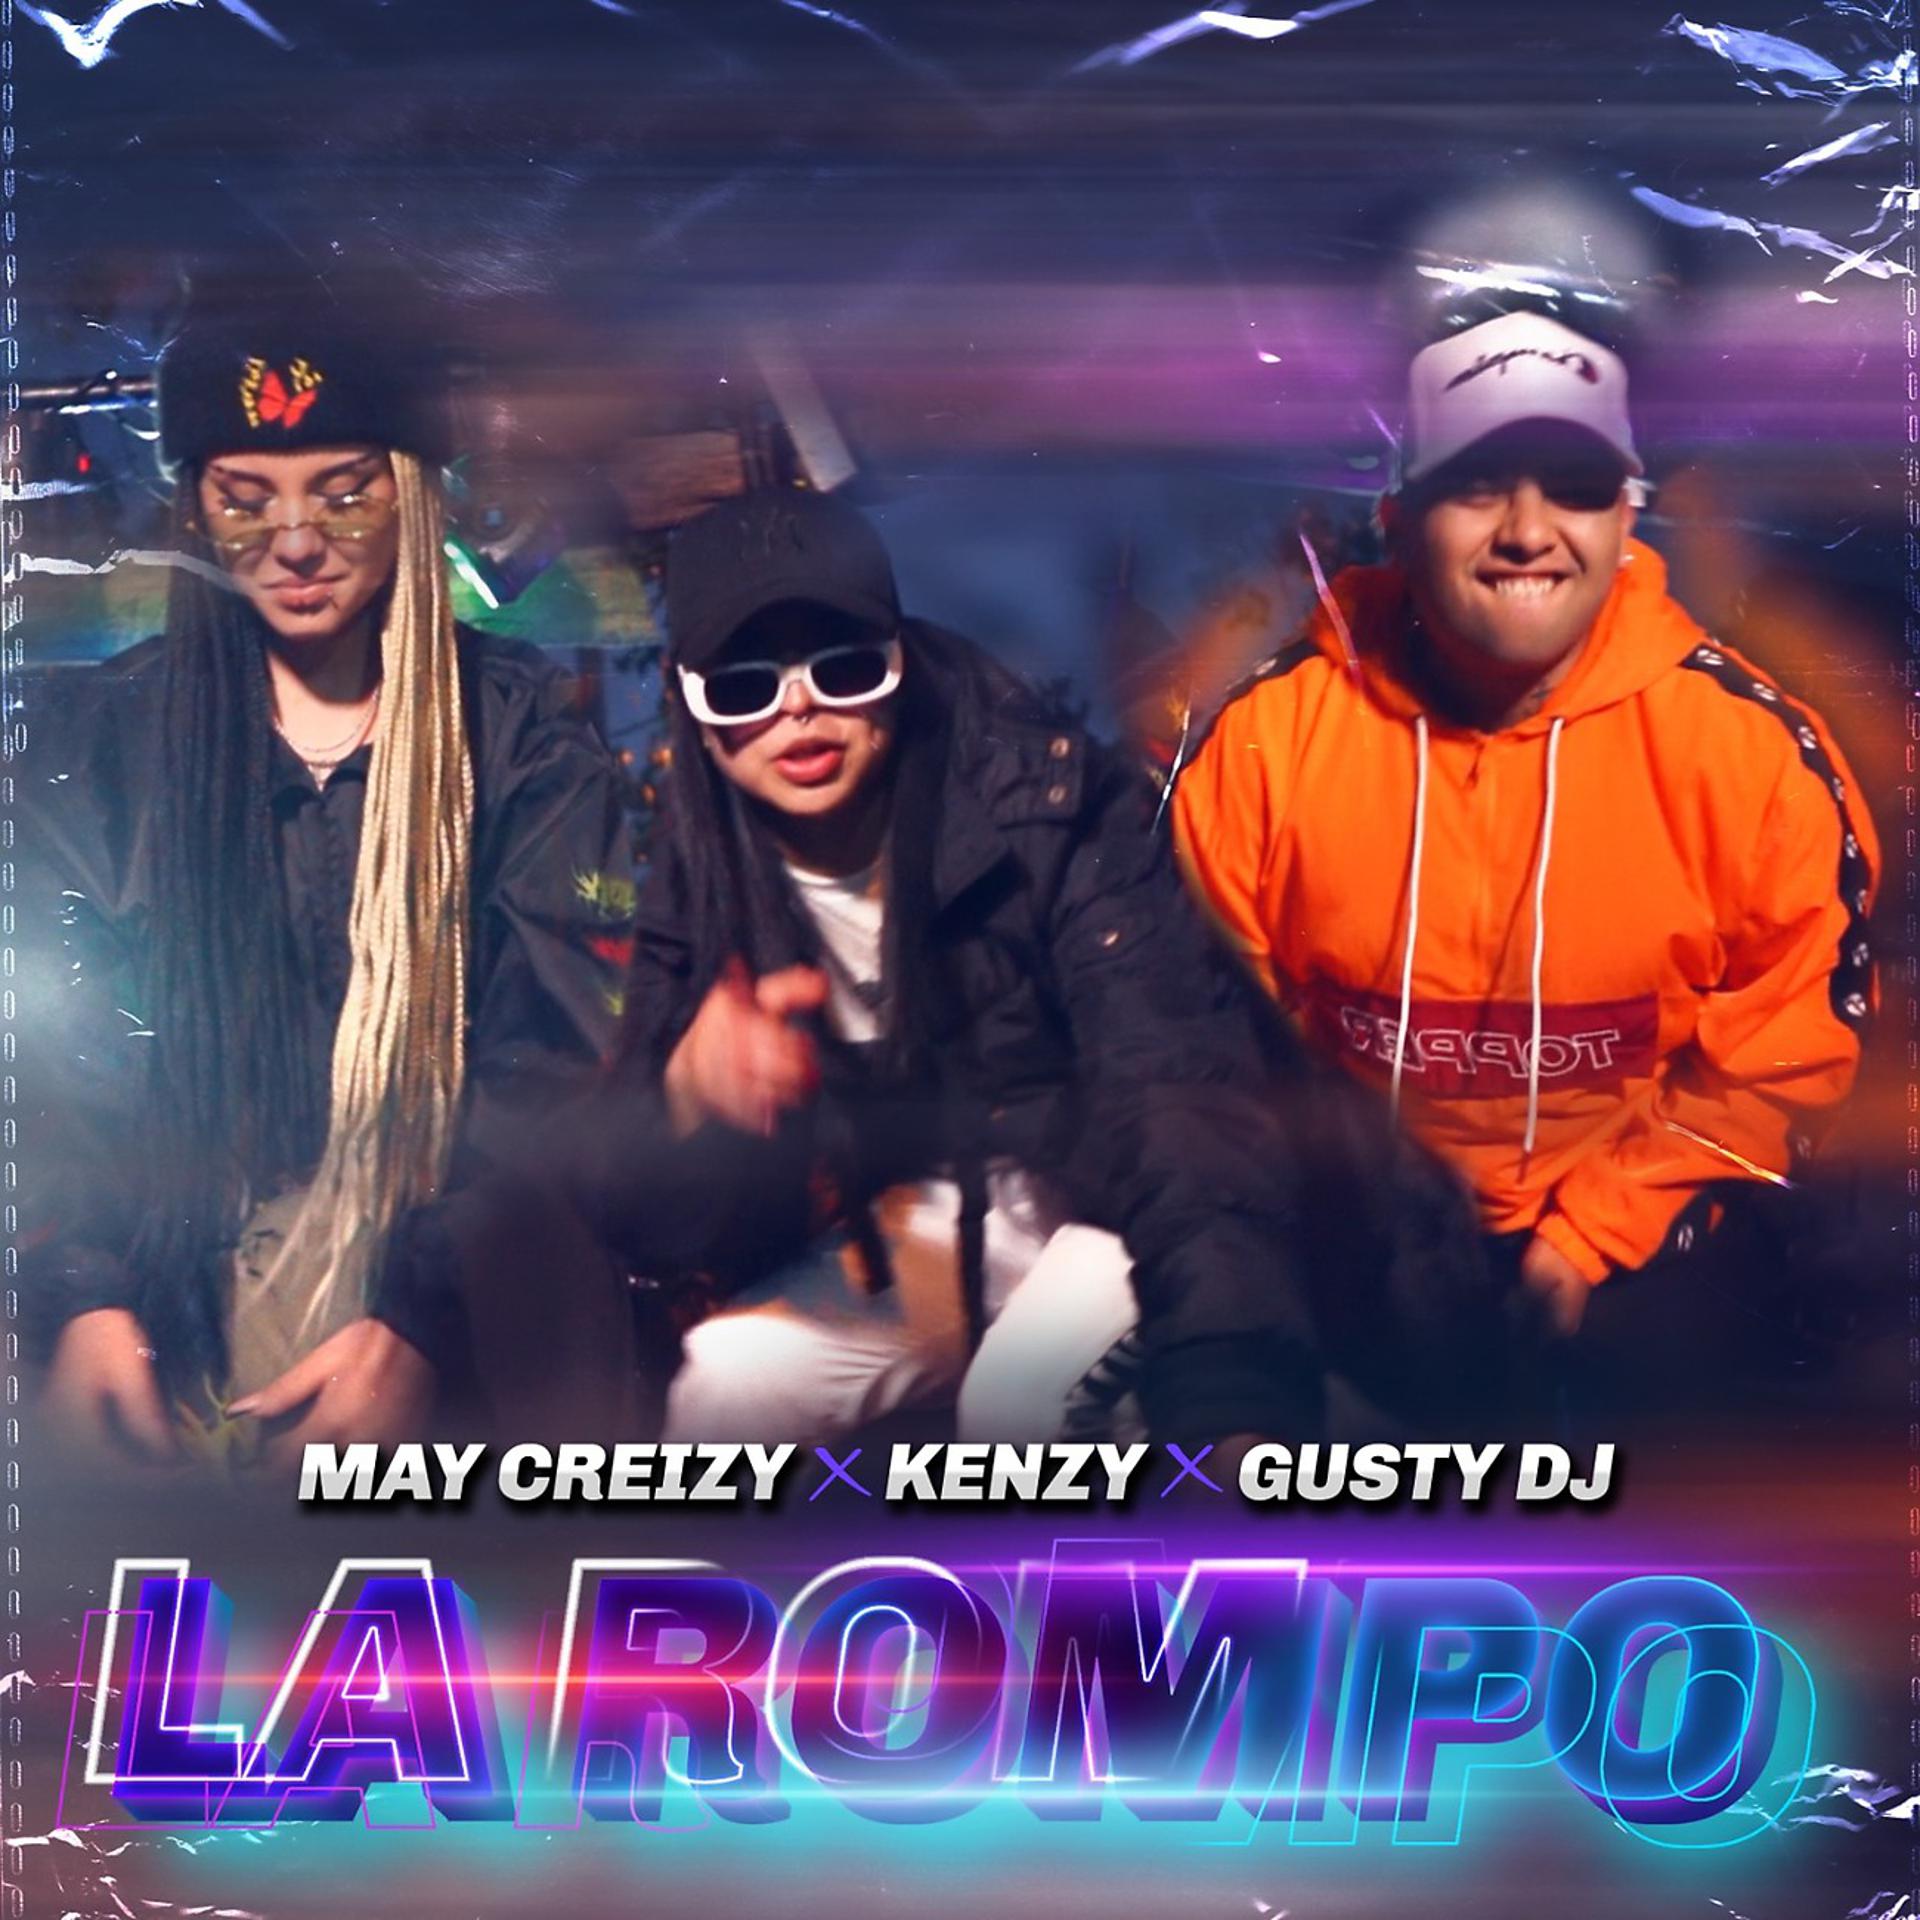 Постер к треку May Creizy, Kenzy, Gusty dj - La Rompo